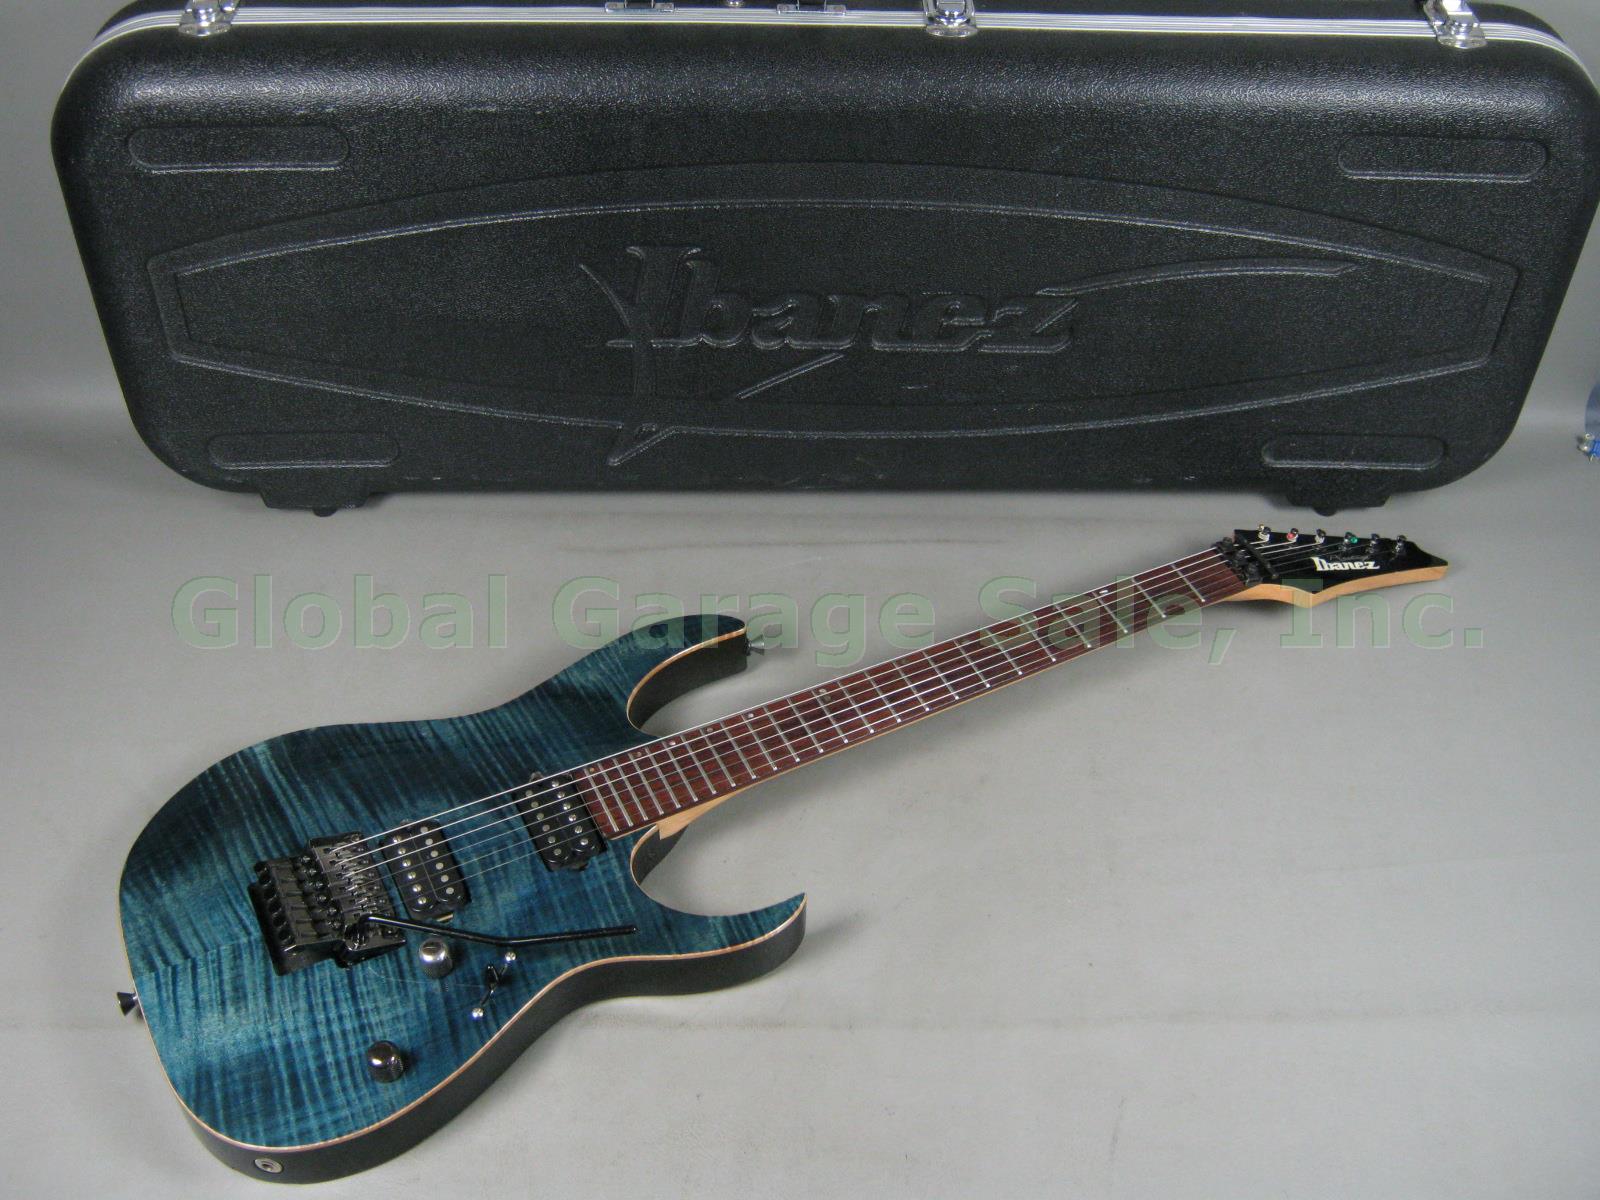 1999 Ibanez Prestige RG3120 Electric Guitar Blue Flame Maple Floyd Rose Tremolo